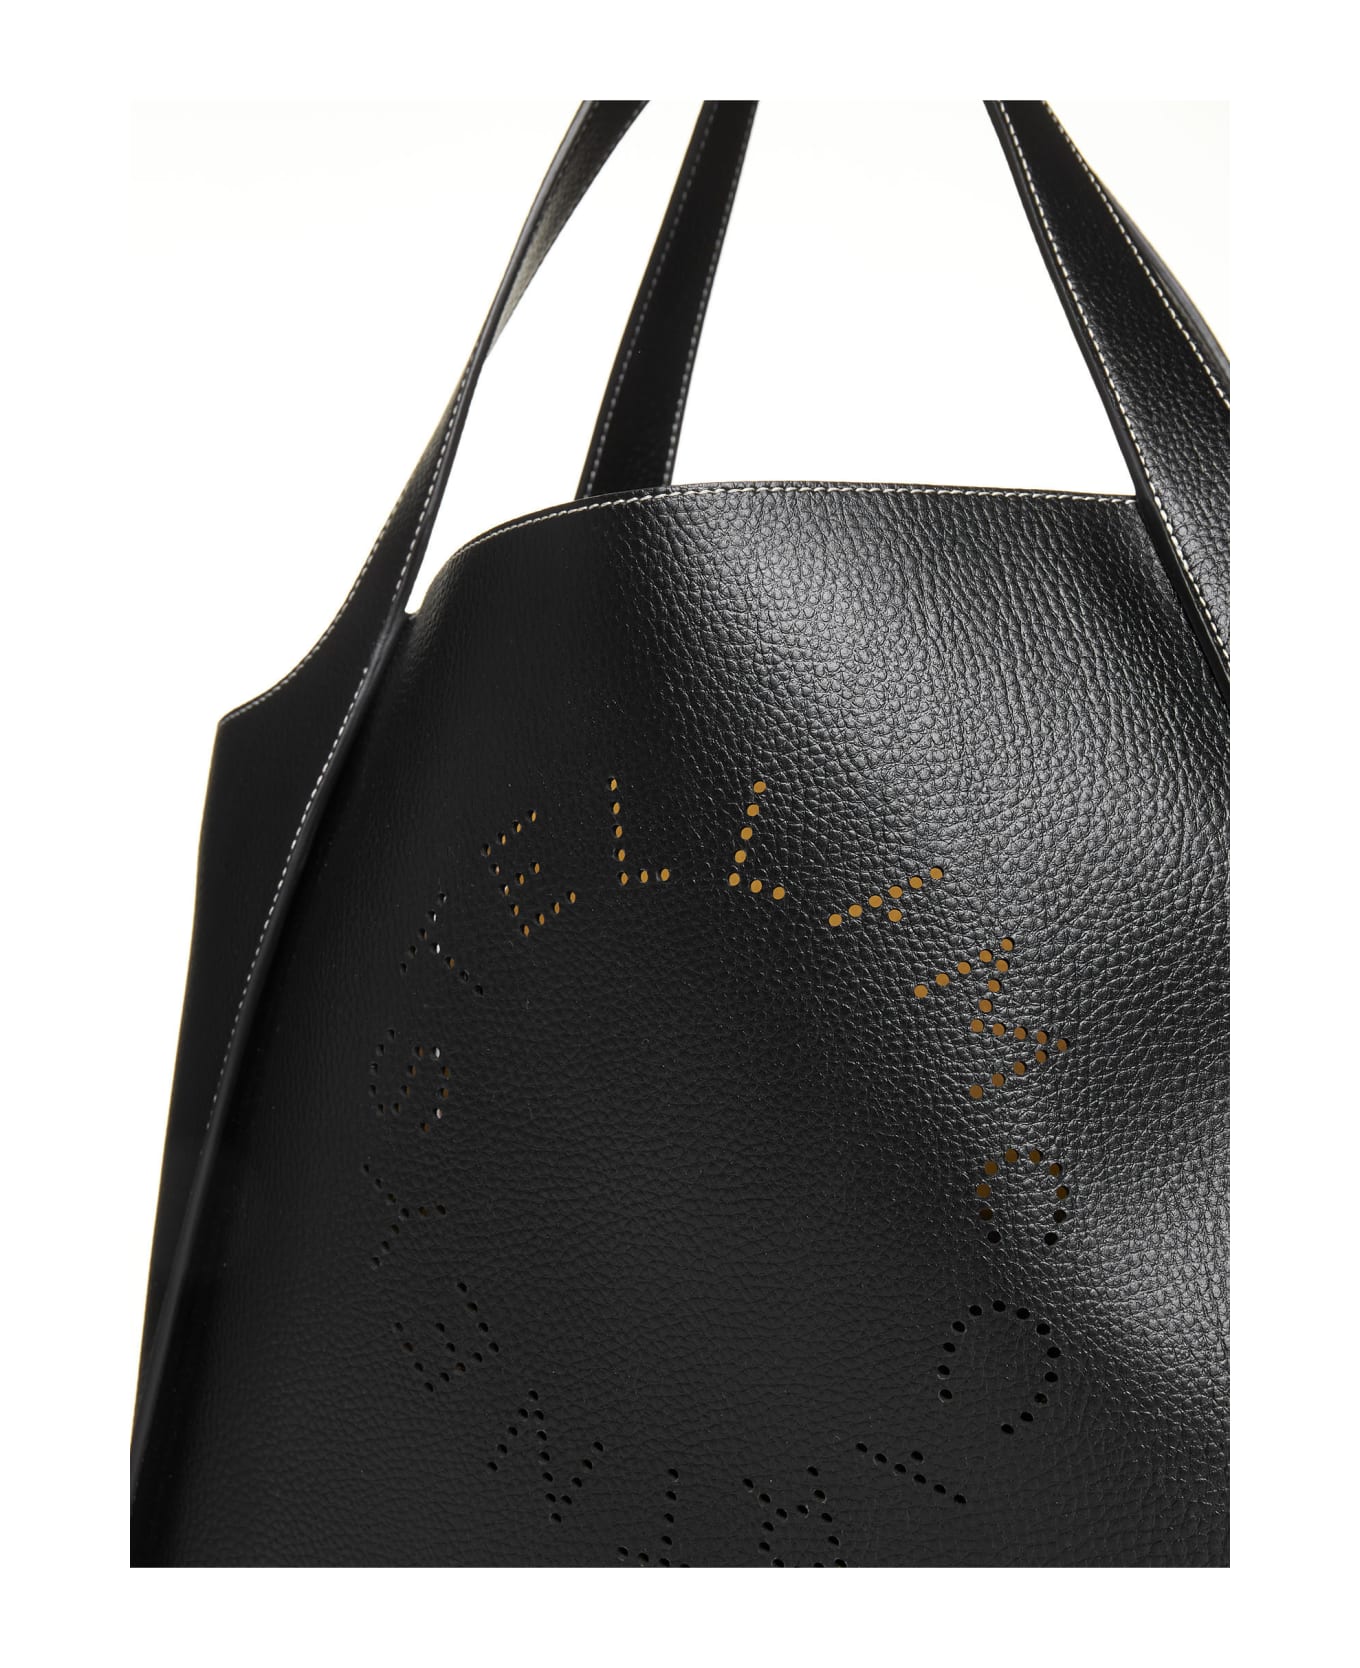 Stella McCartney Tote Bag With Logo - Black トートバッグ